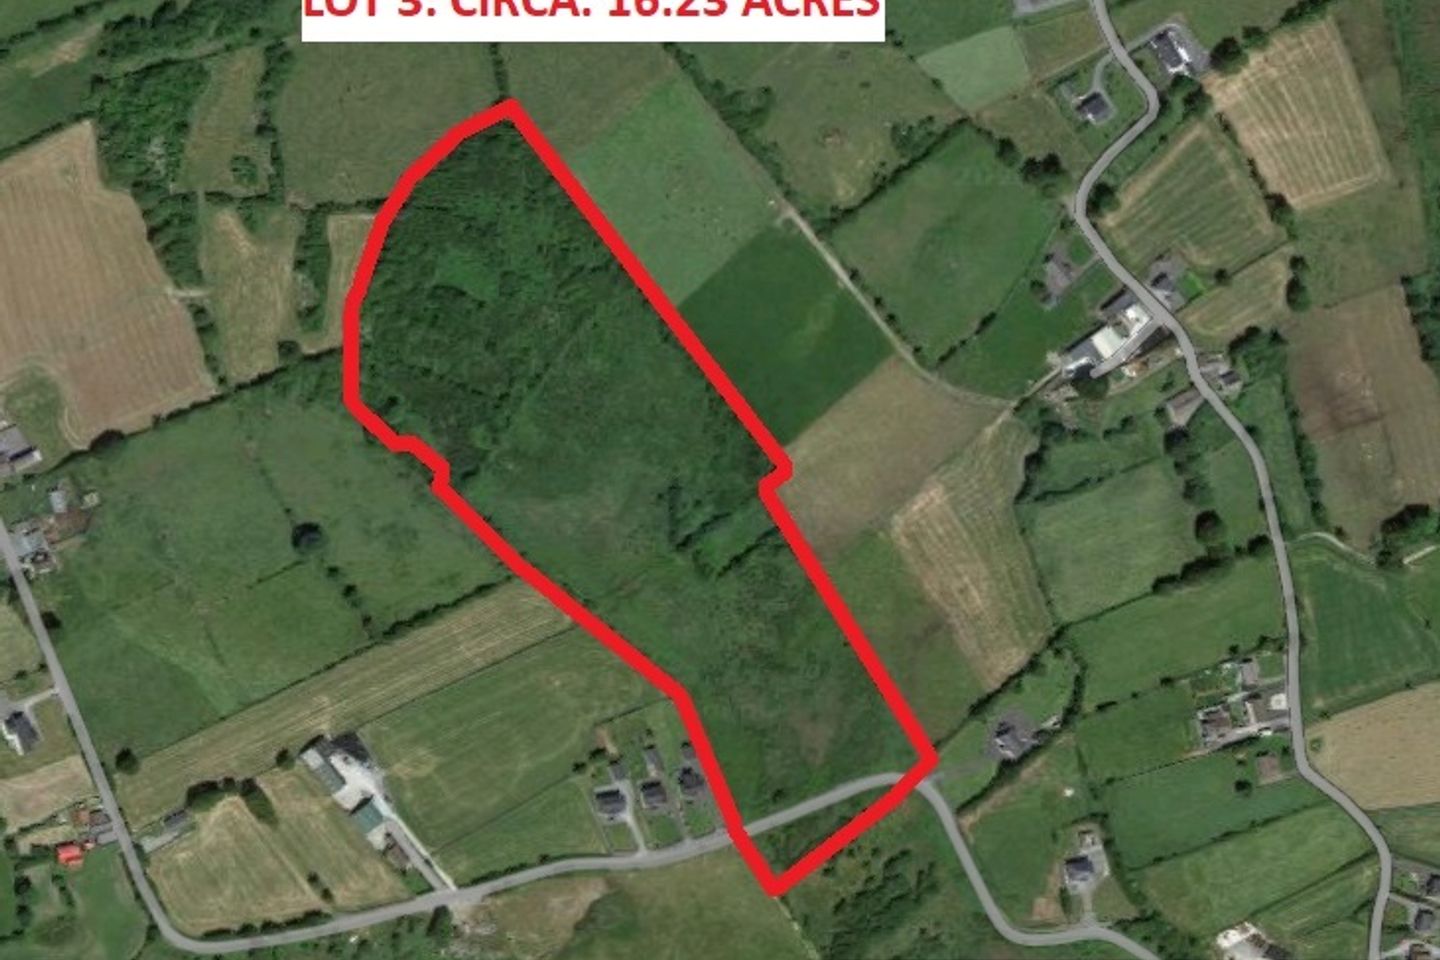 Lot 3 - circa 16.23 acres at Mace, Corrandulla, Co. Galway